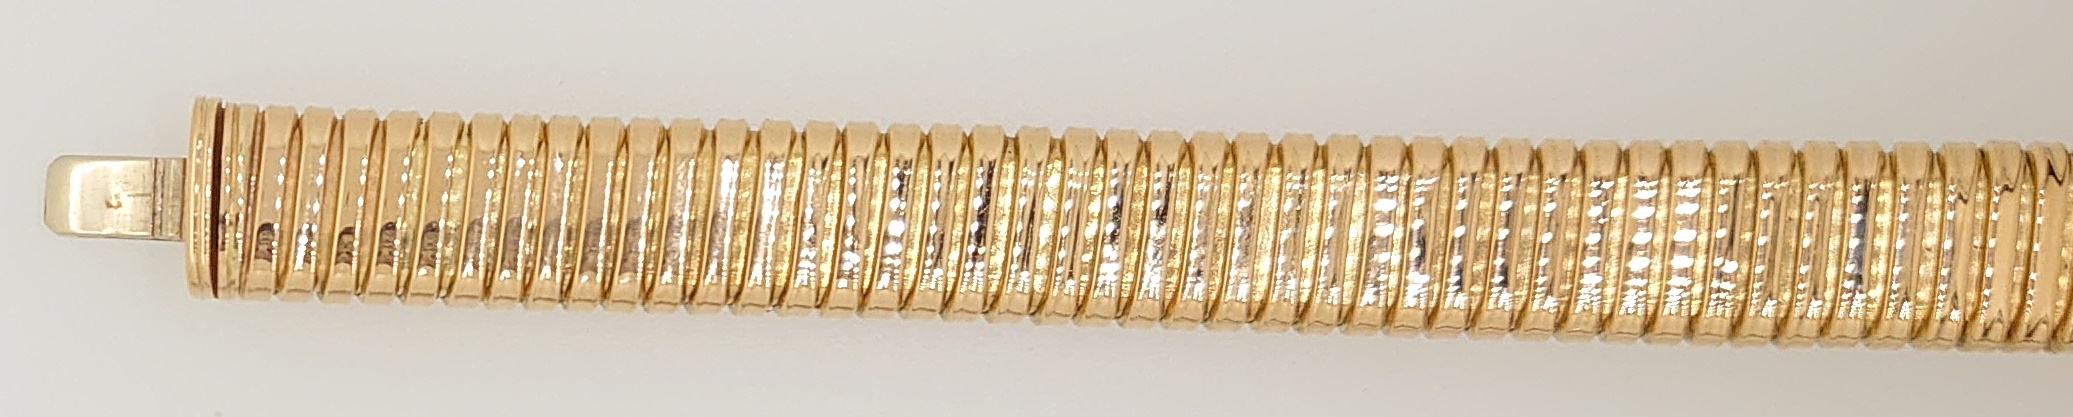 Bracelet Roségold 750 Handarbeit 12.0mm 19cm